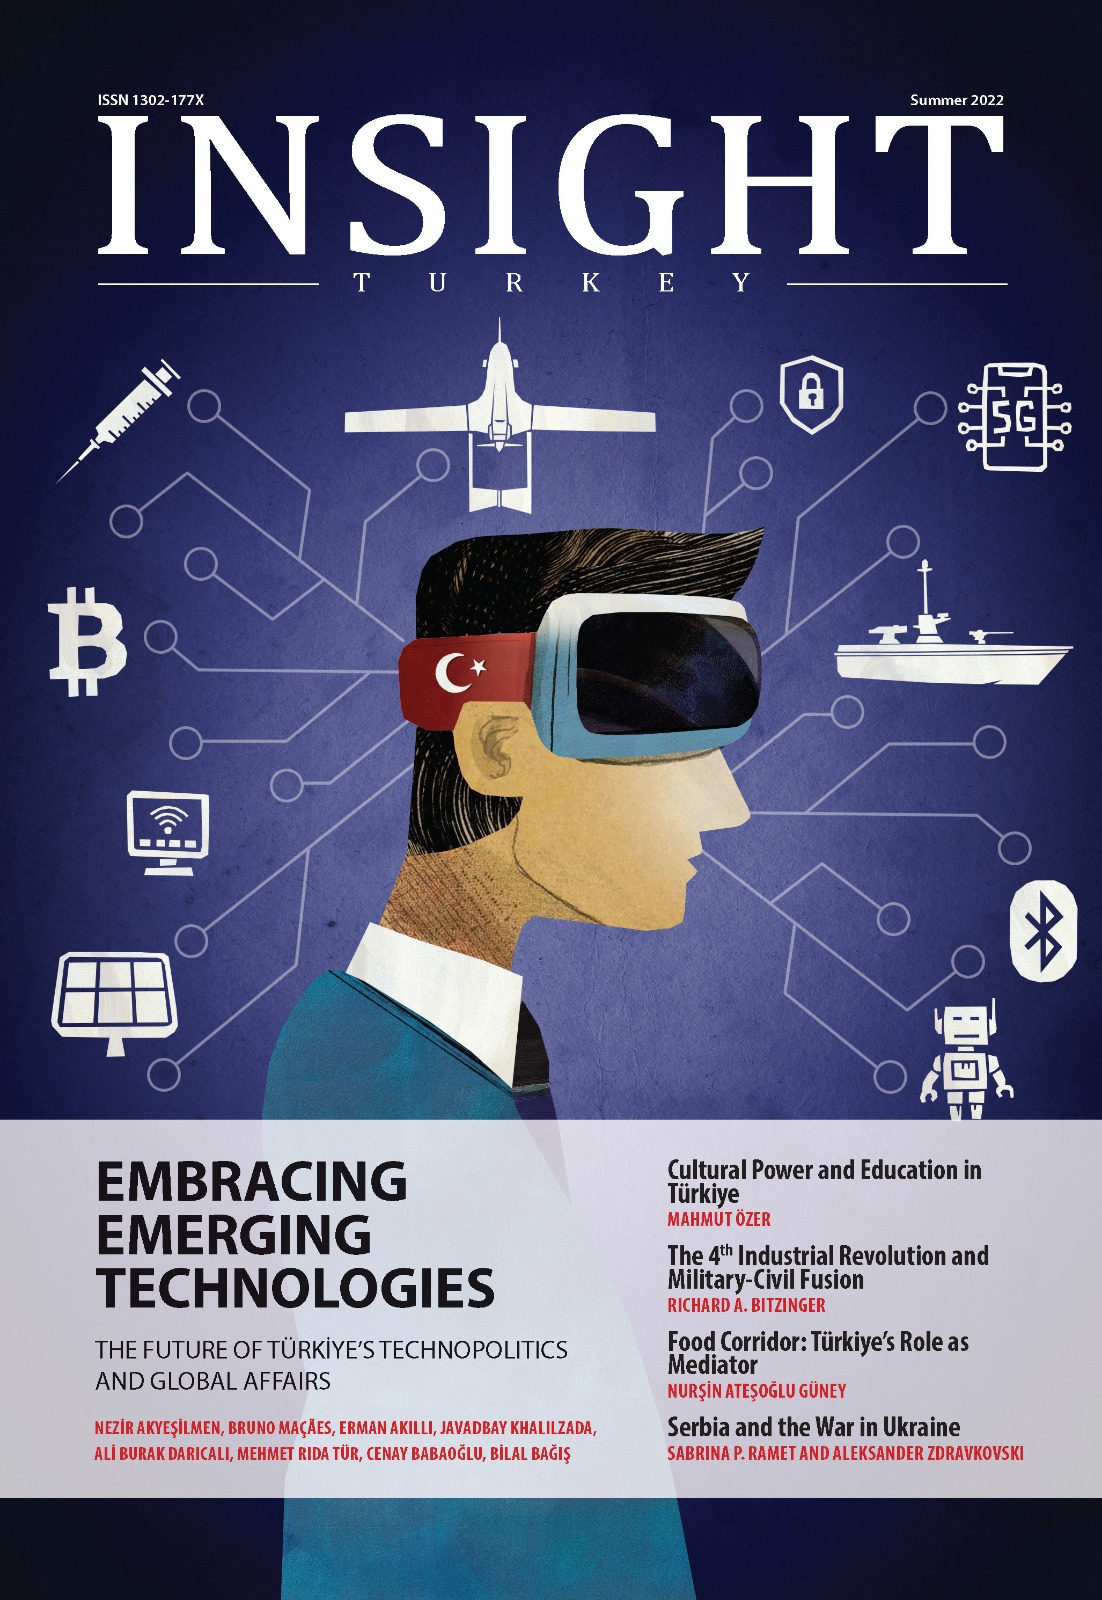 Embracing Emerging Technologies